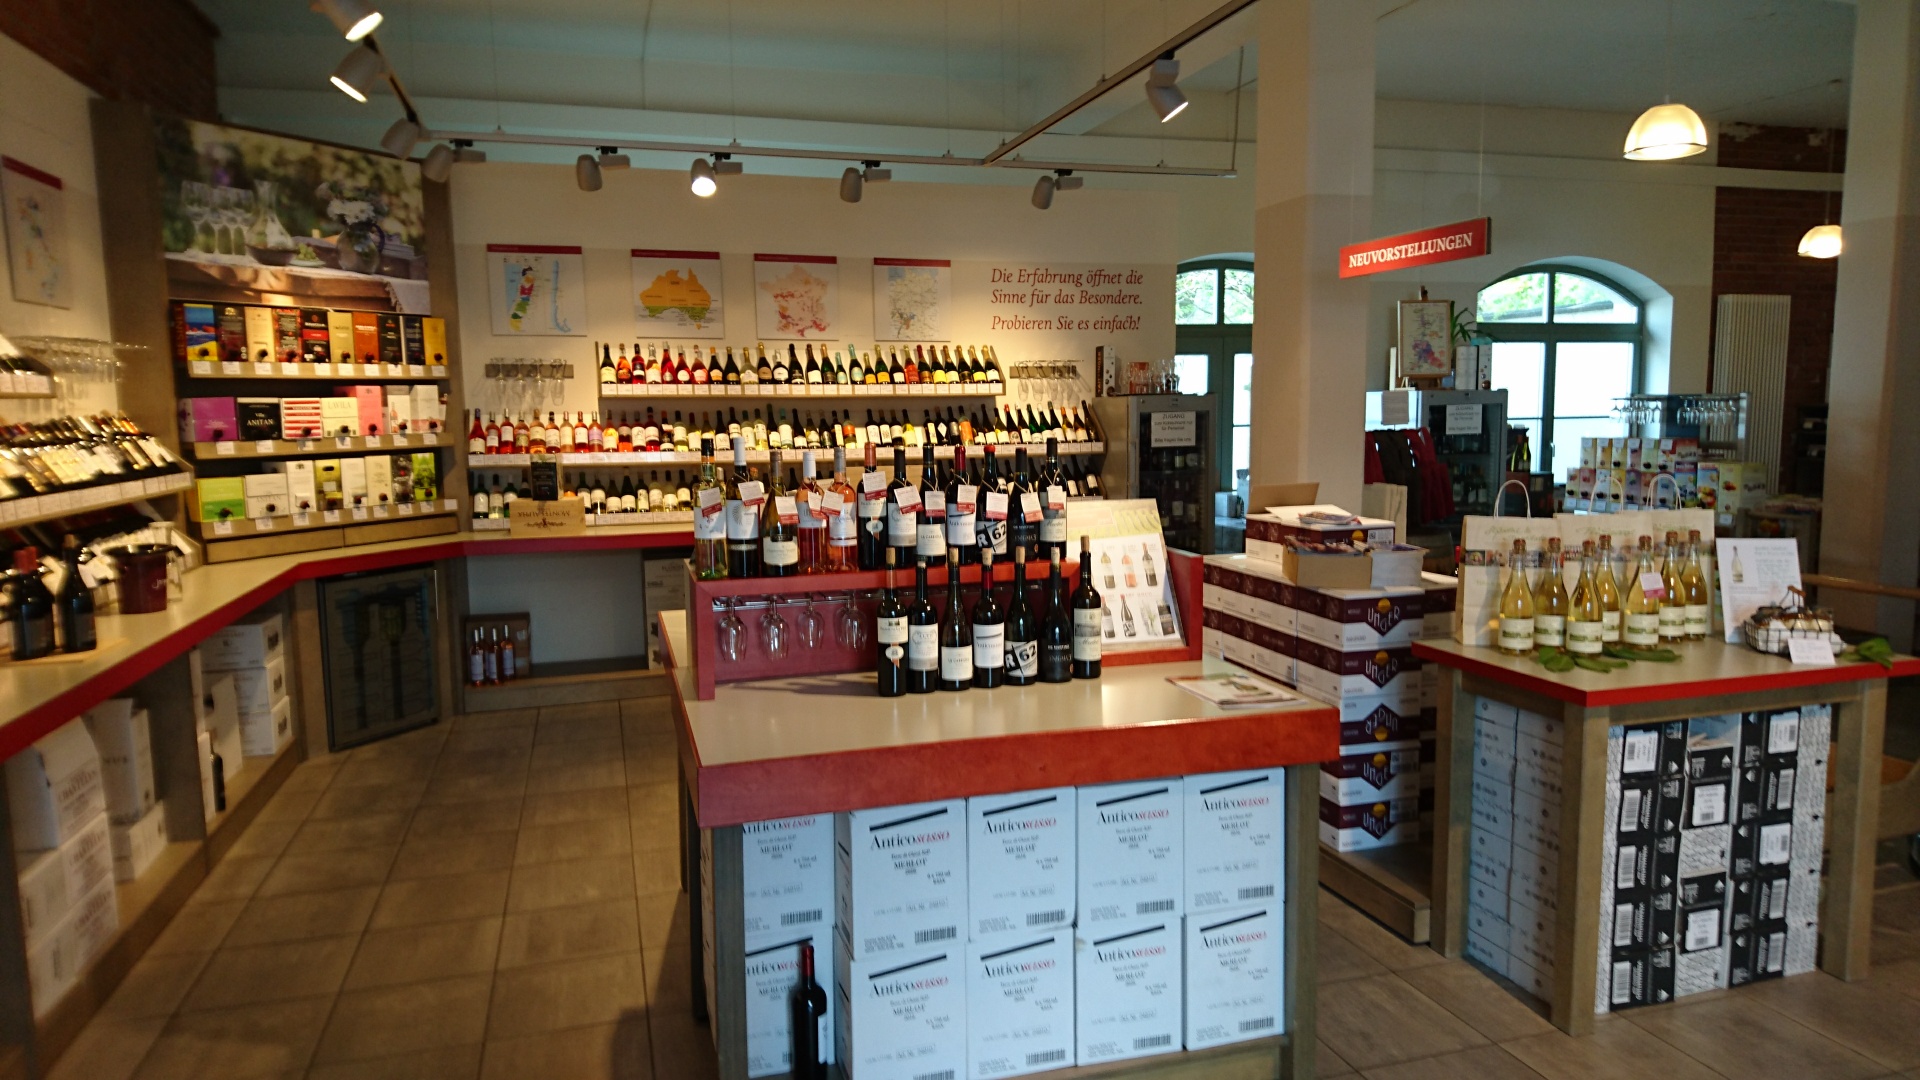 Bilder Jacques’ Wein-Depot Ulm-Obere Donaubastion